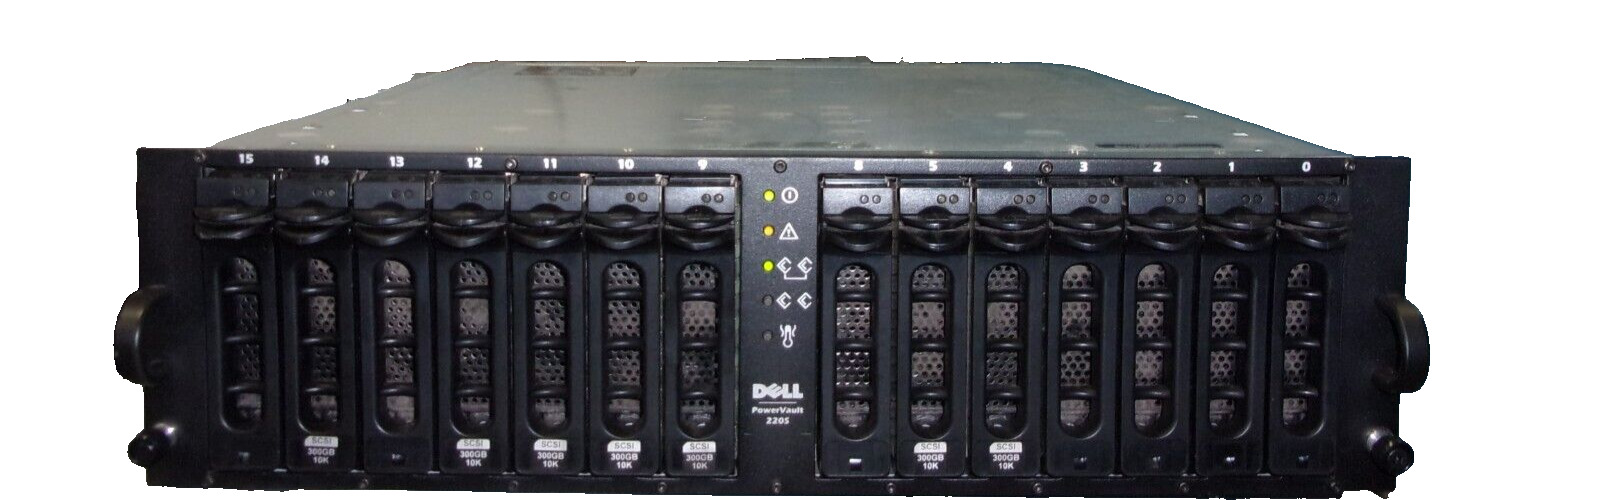 Dell PowerVault 2205 AMP01 14-Bay Disk Array External Storage (W/CADDIES)